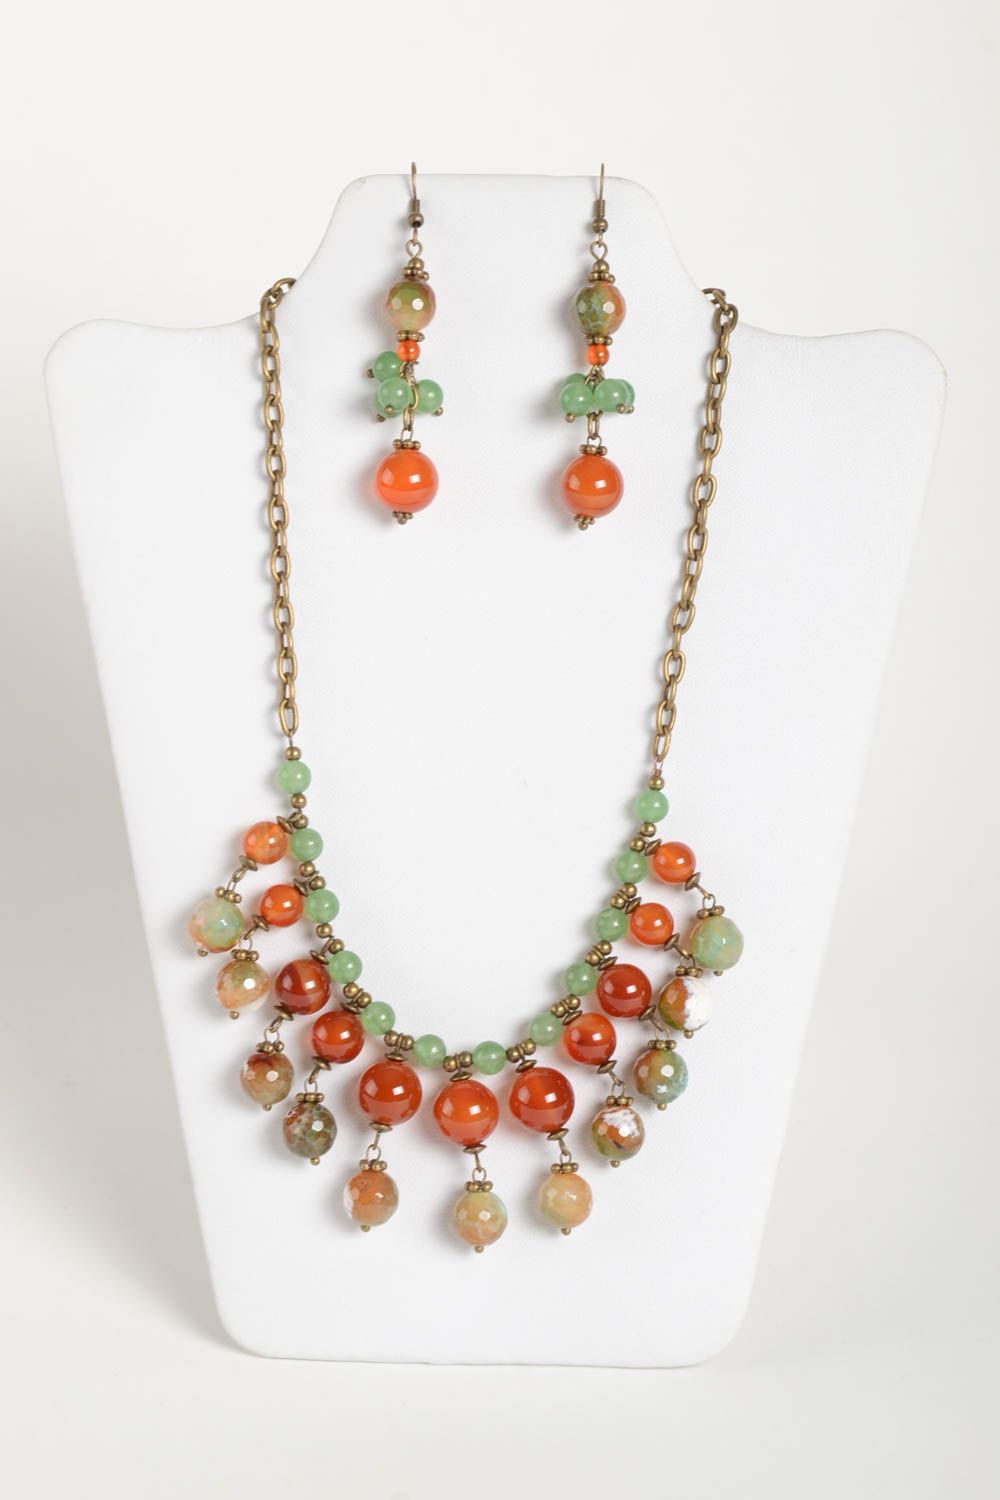 Handmade natural stone jewelry designer tender necklace elegant earrings photo 2